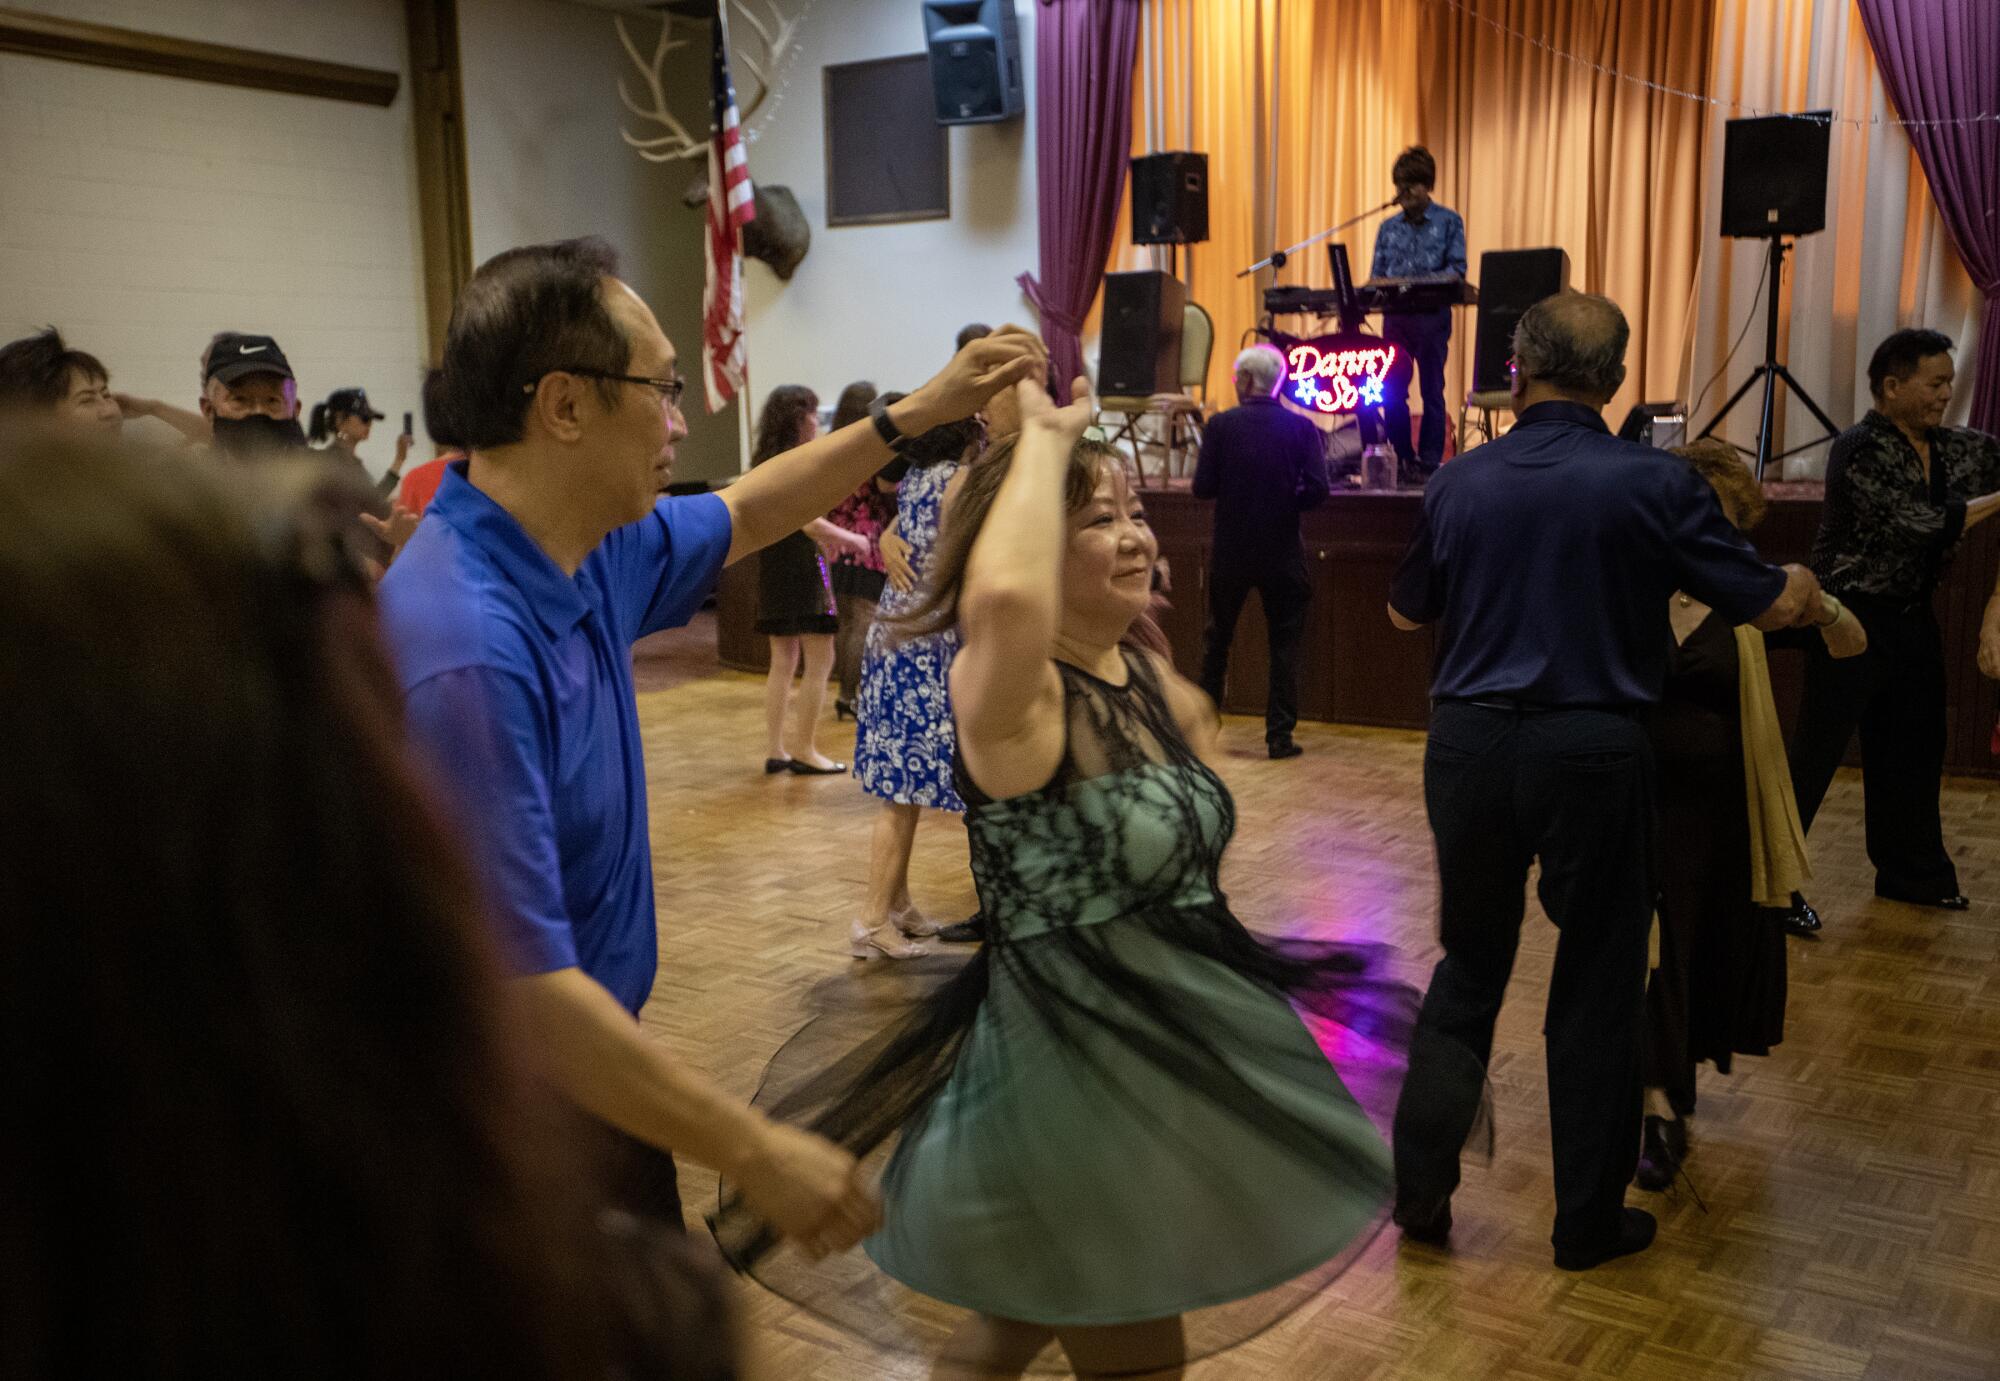 A man twirls a woman on the dance floor.